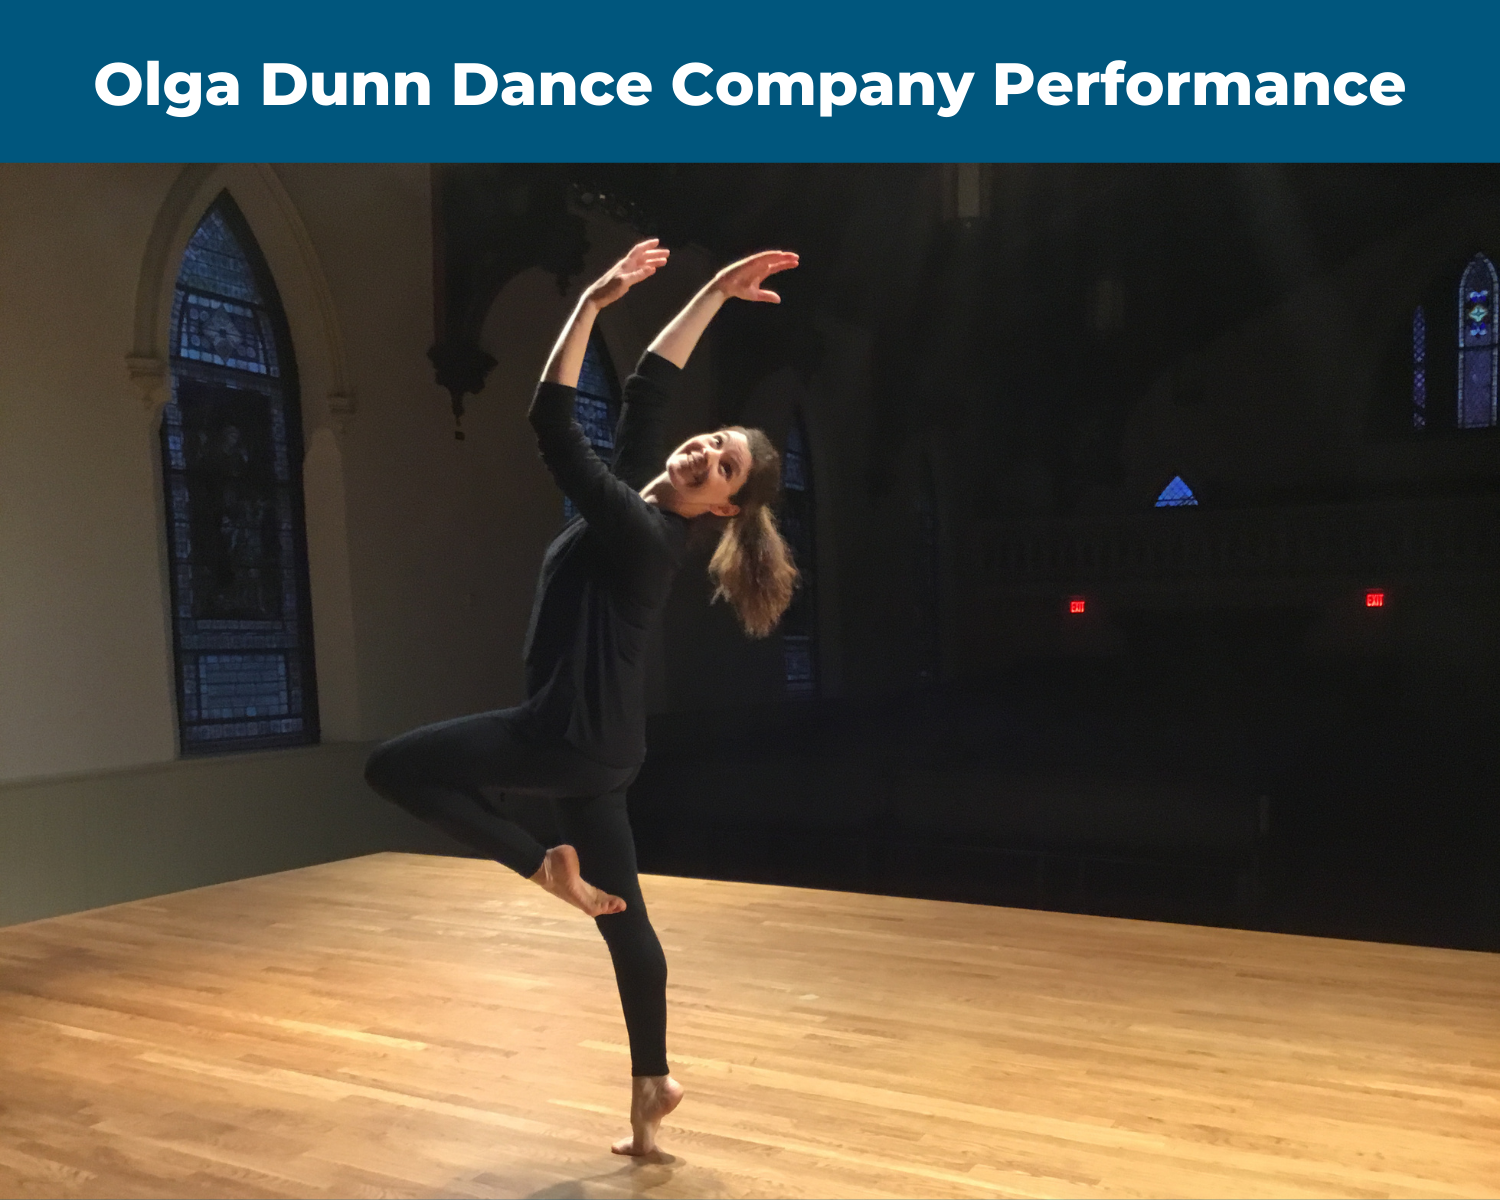 Olga Dunn Dance Company Performance